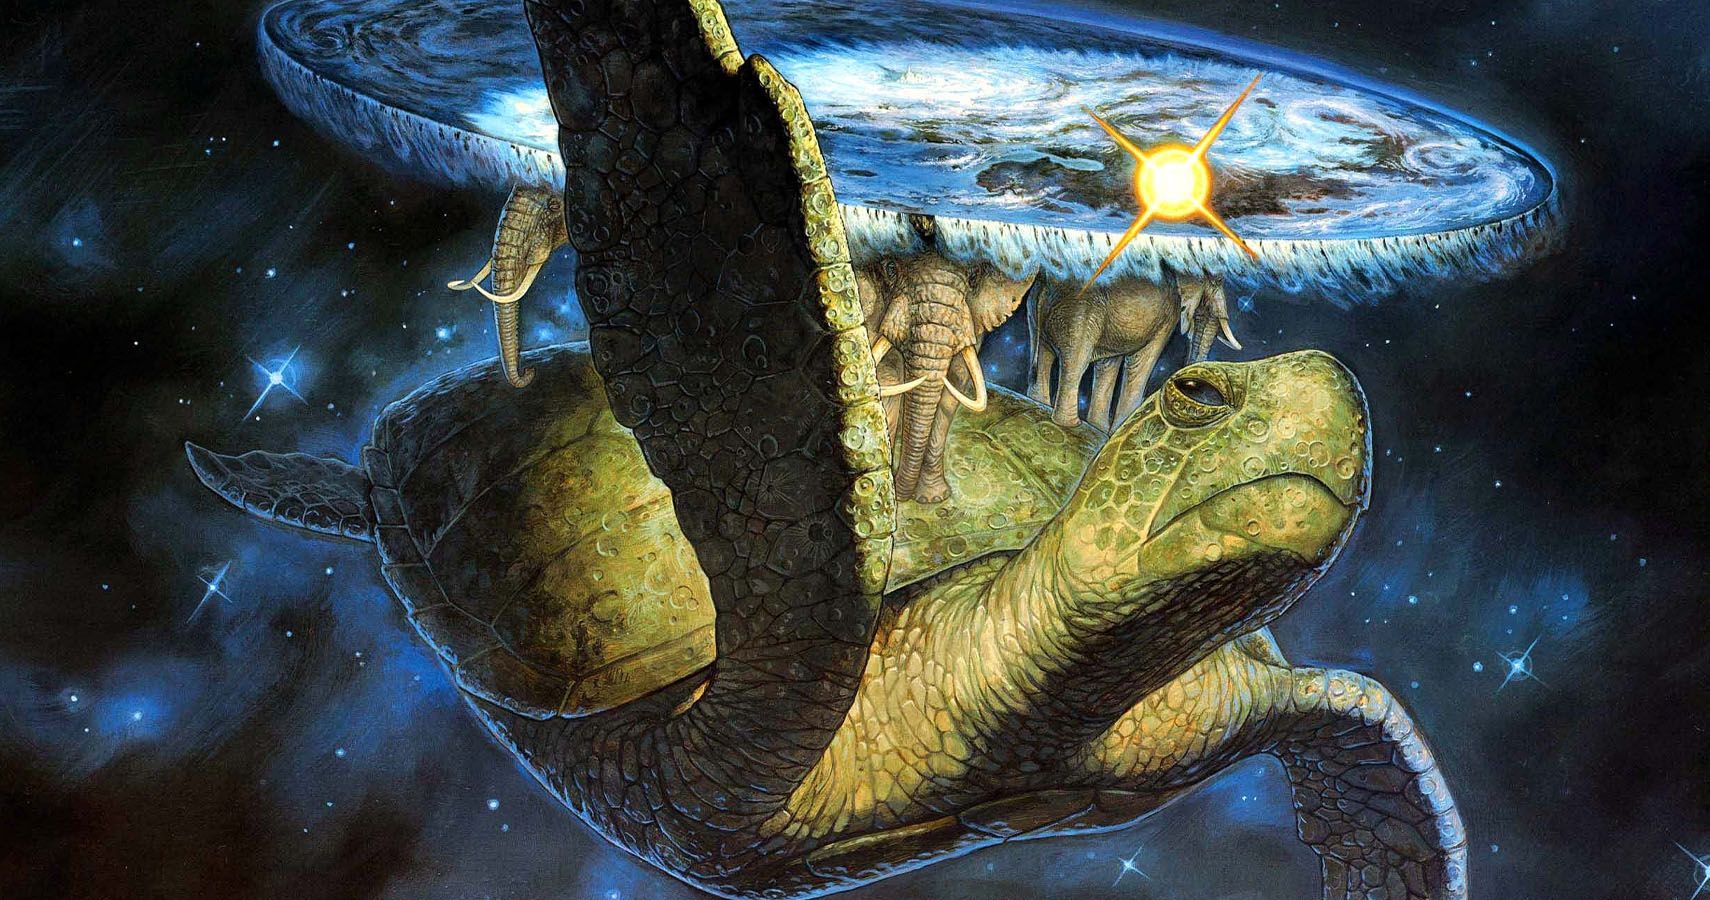 Discworld artwork, big space turtle with elephants on it